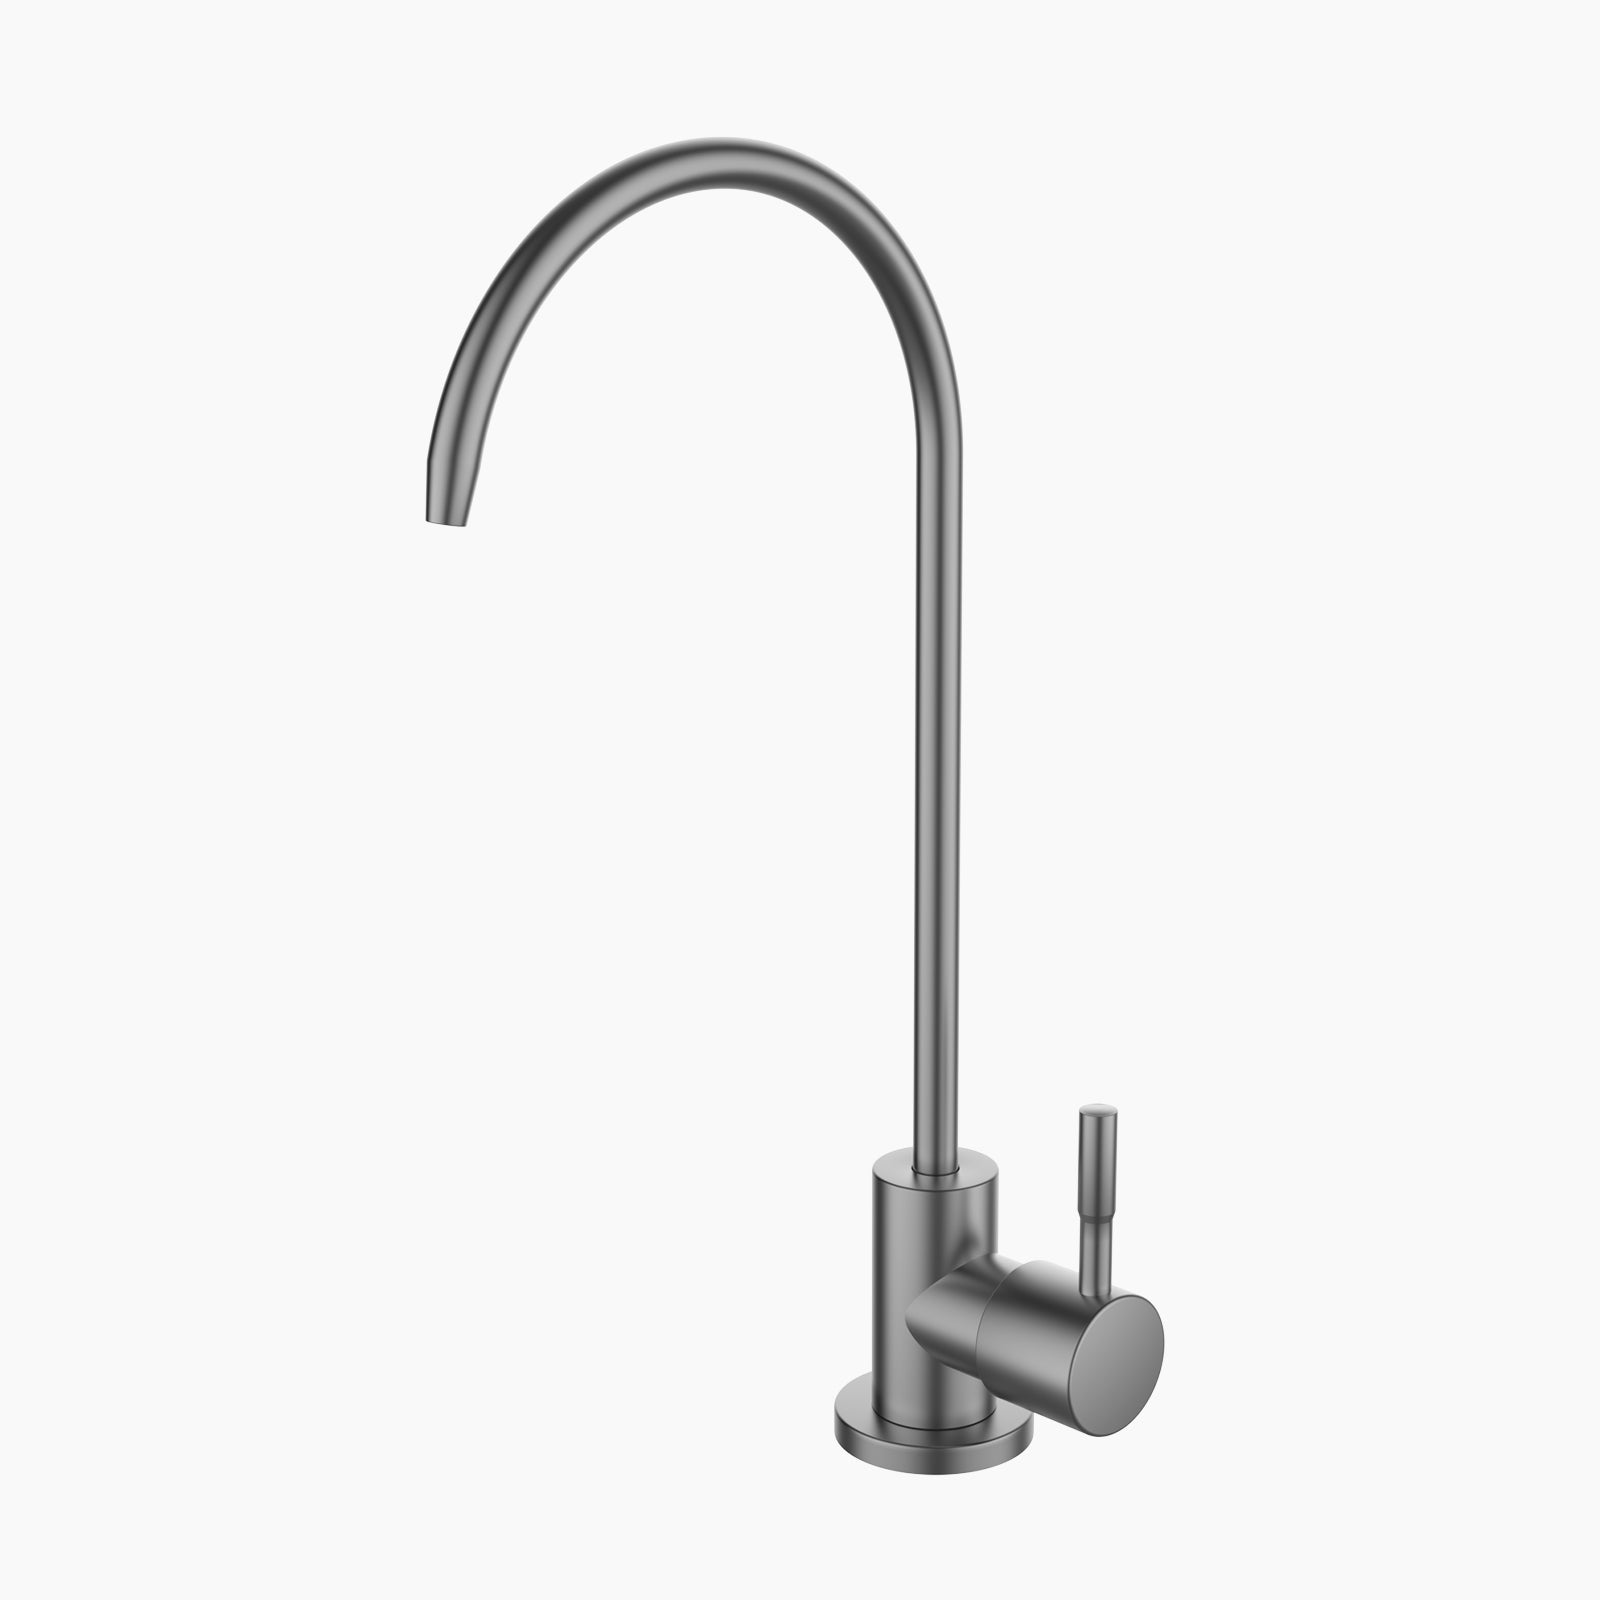 Lefton Kitchen Water Purifier Faucet - WPF2301 -Water purifier faucet- Lefton Home